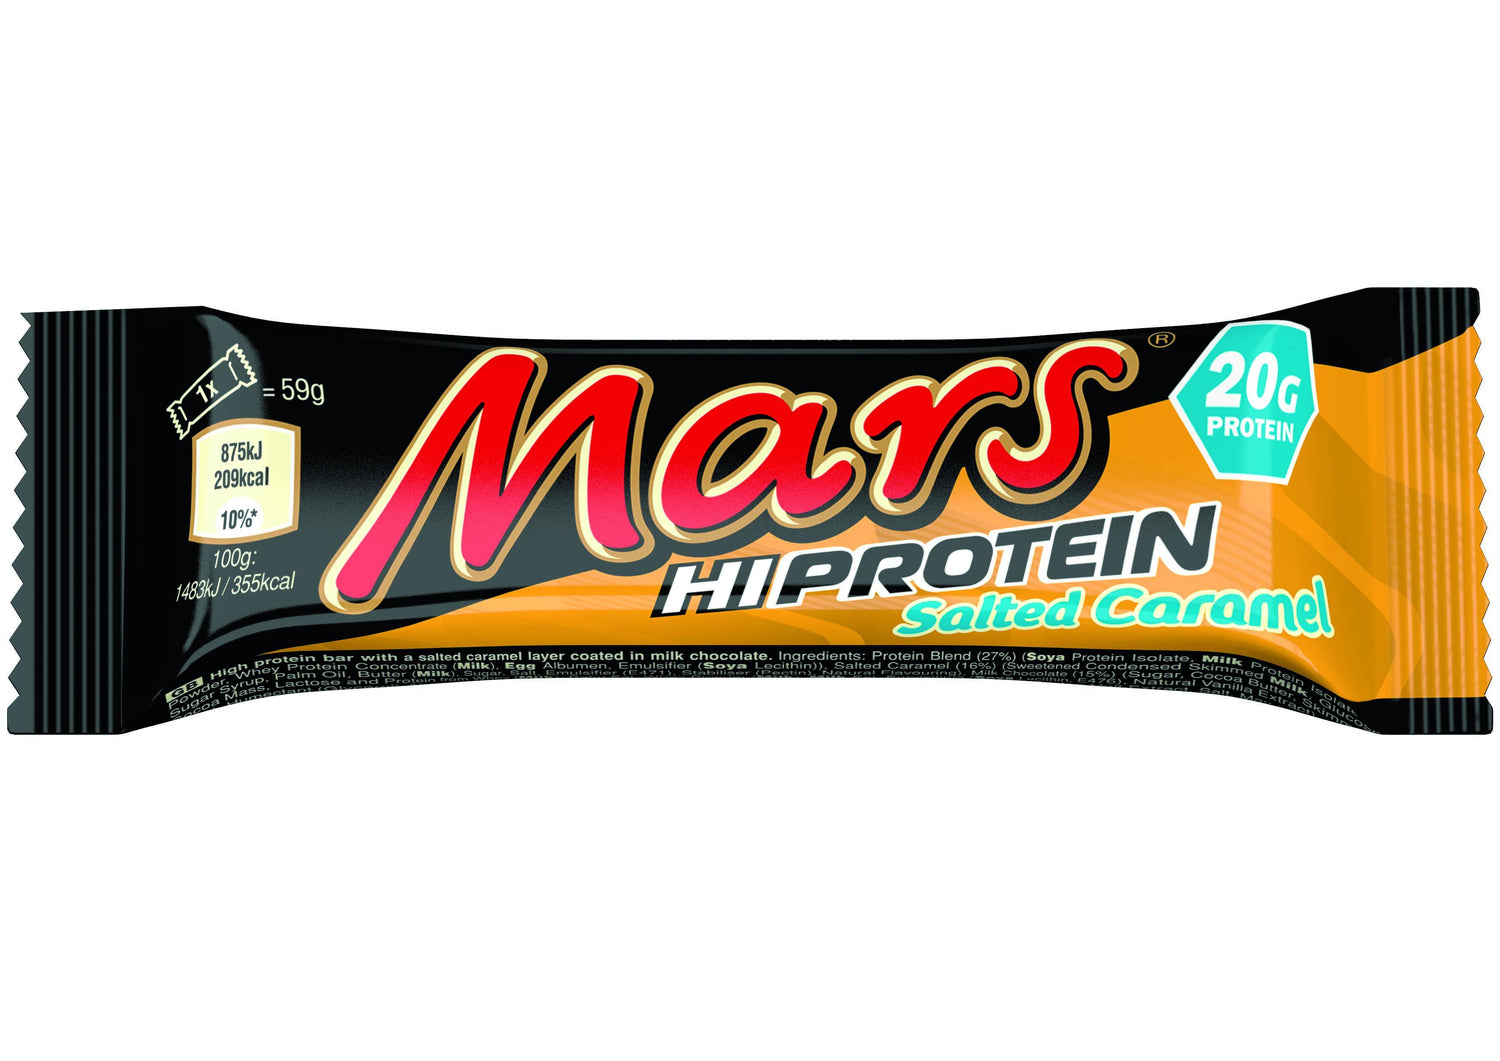 Mars Hi Proteinriegel 1 x 59 g - gesalzenes Karamell - theskinnyfoodco